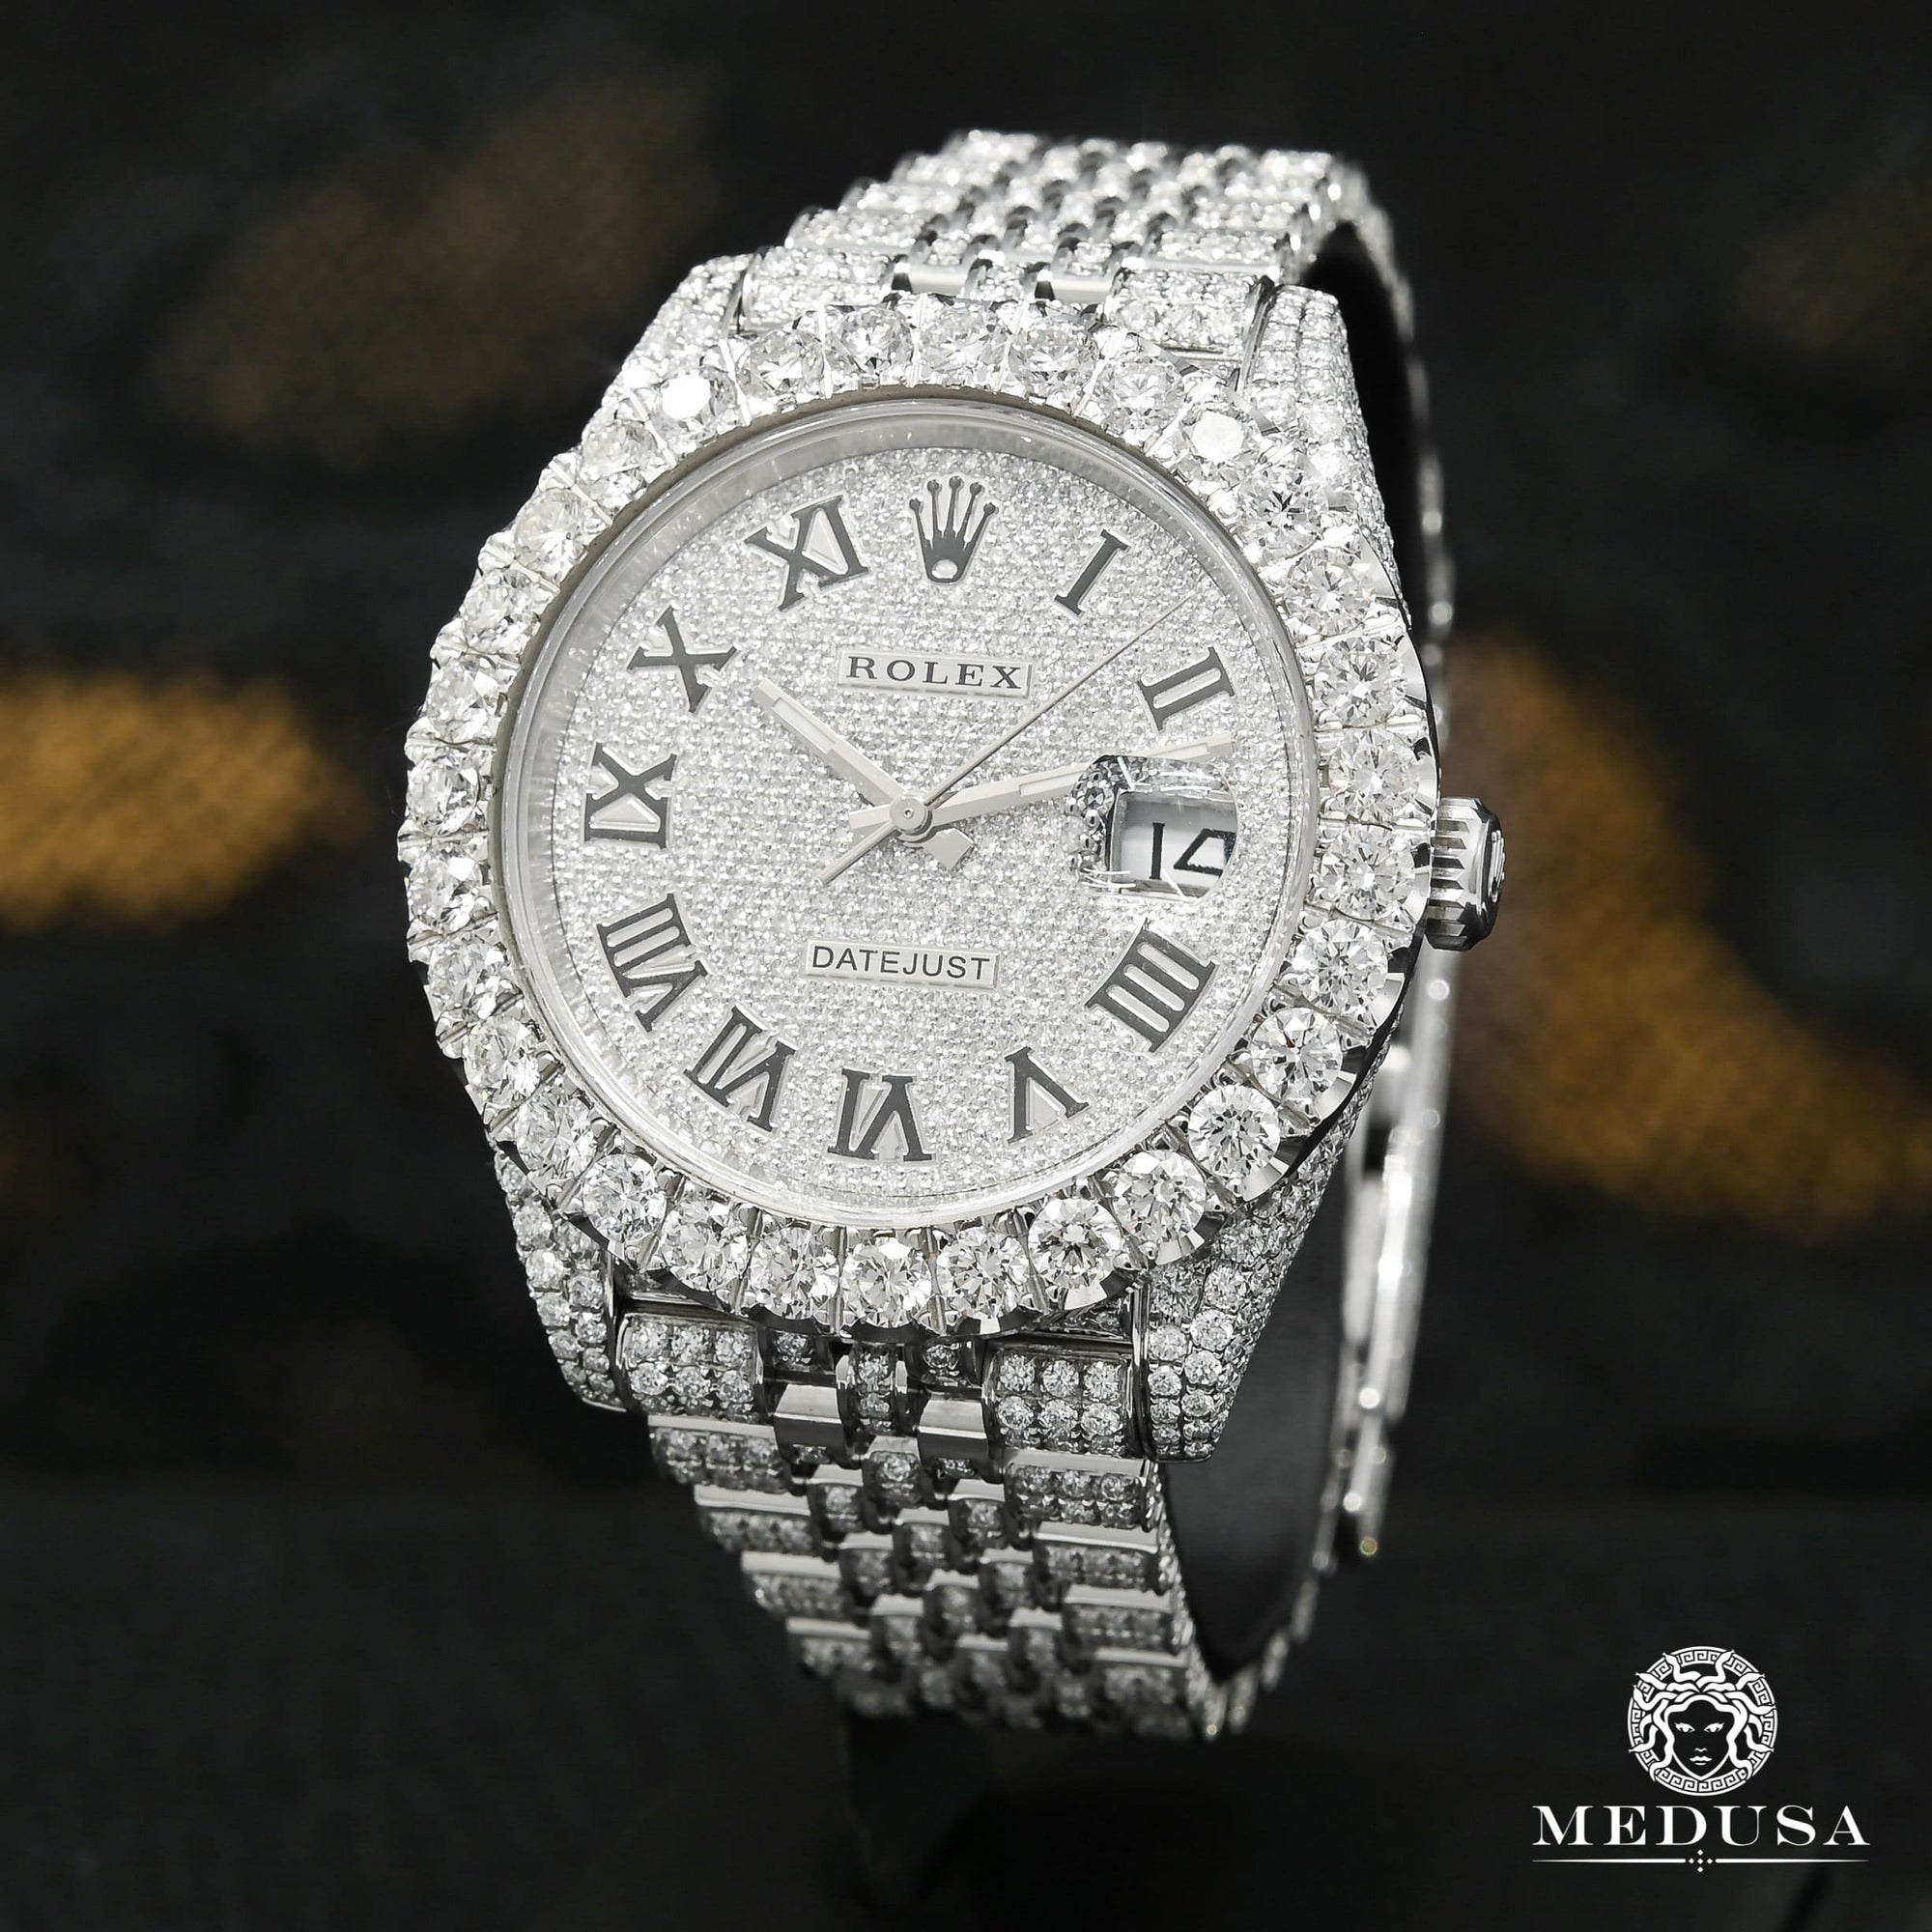 Rolex watch | Rolex Datejust Men's Watch 41mm - Jubilee Full Honeycomb Stainless